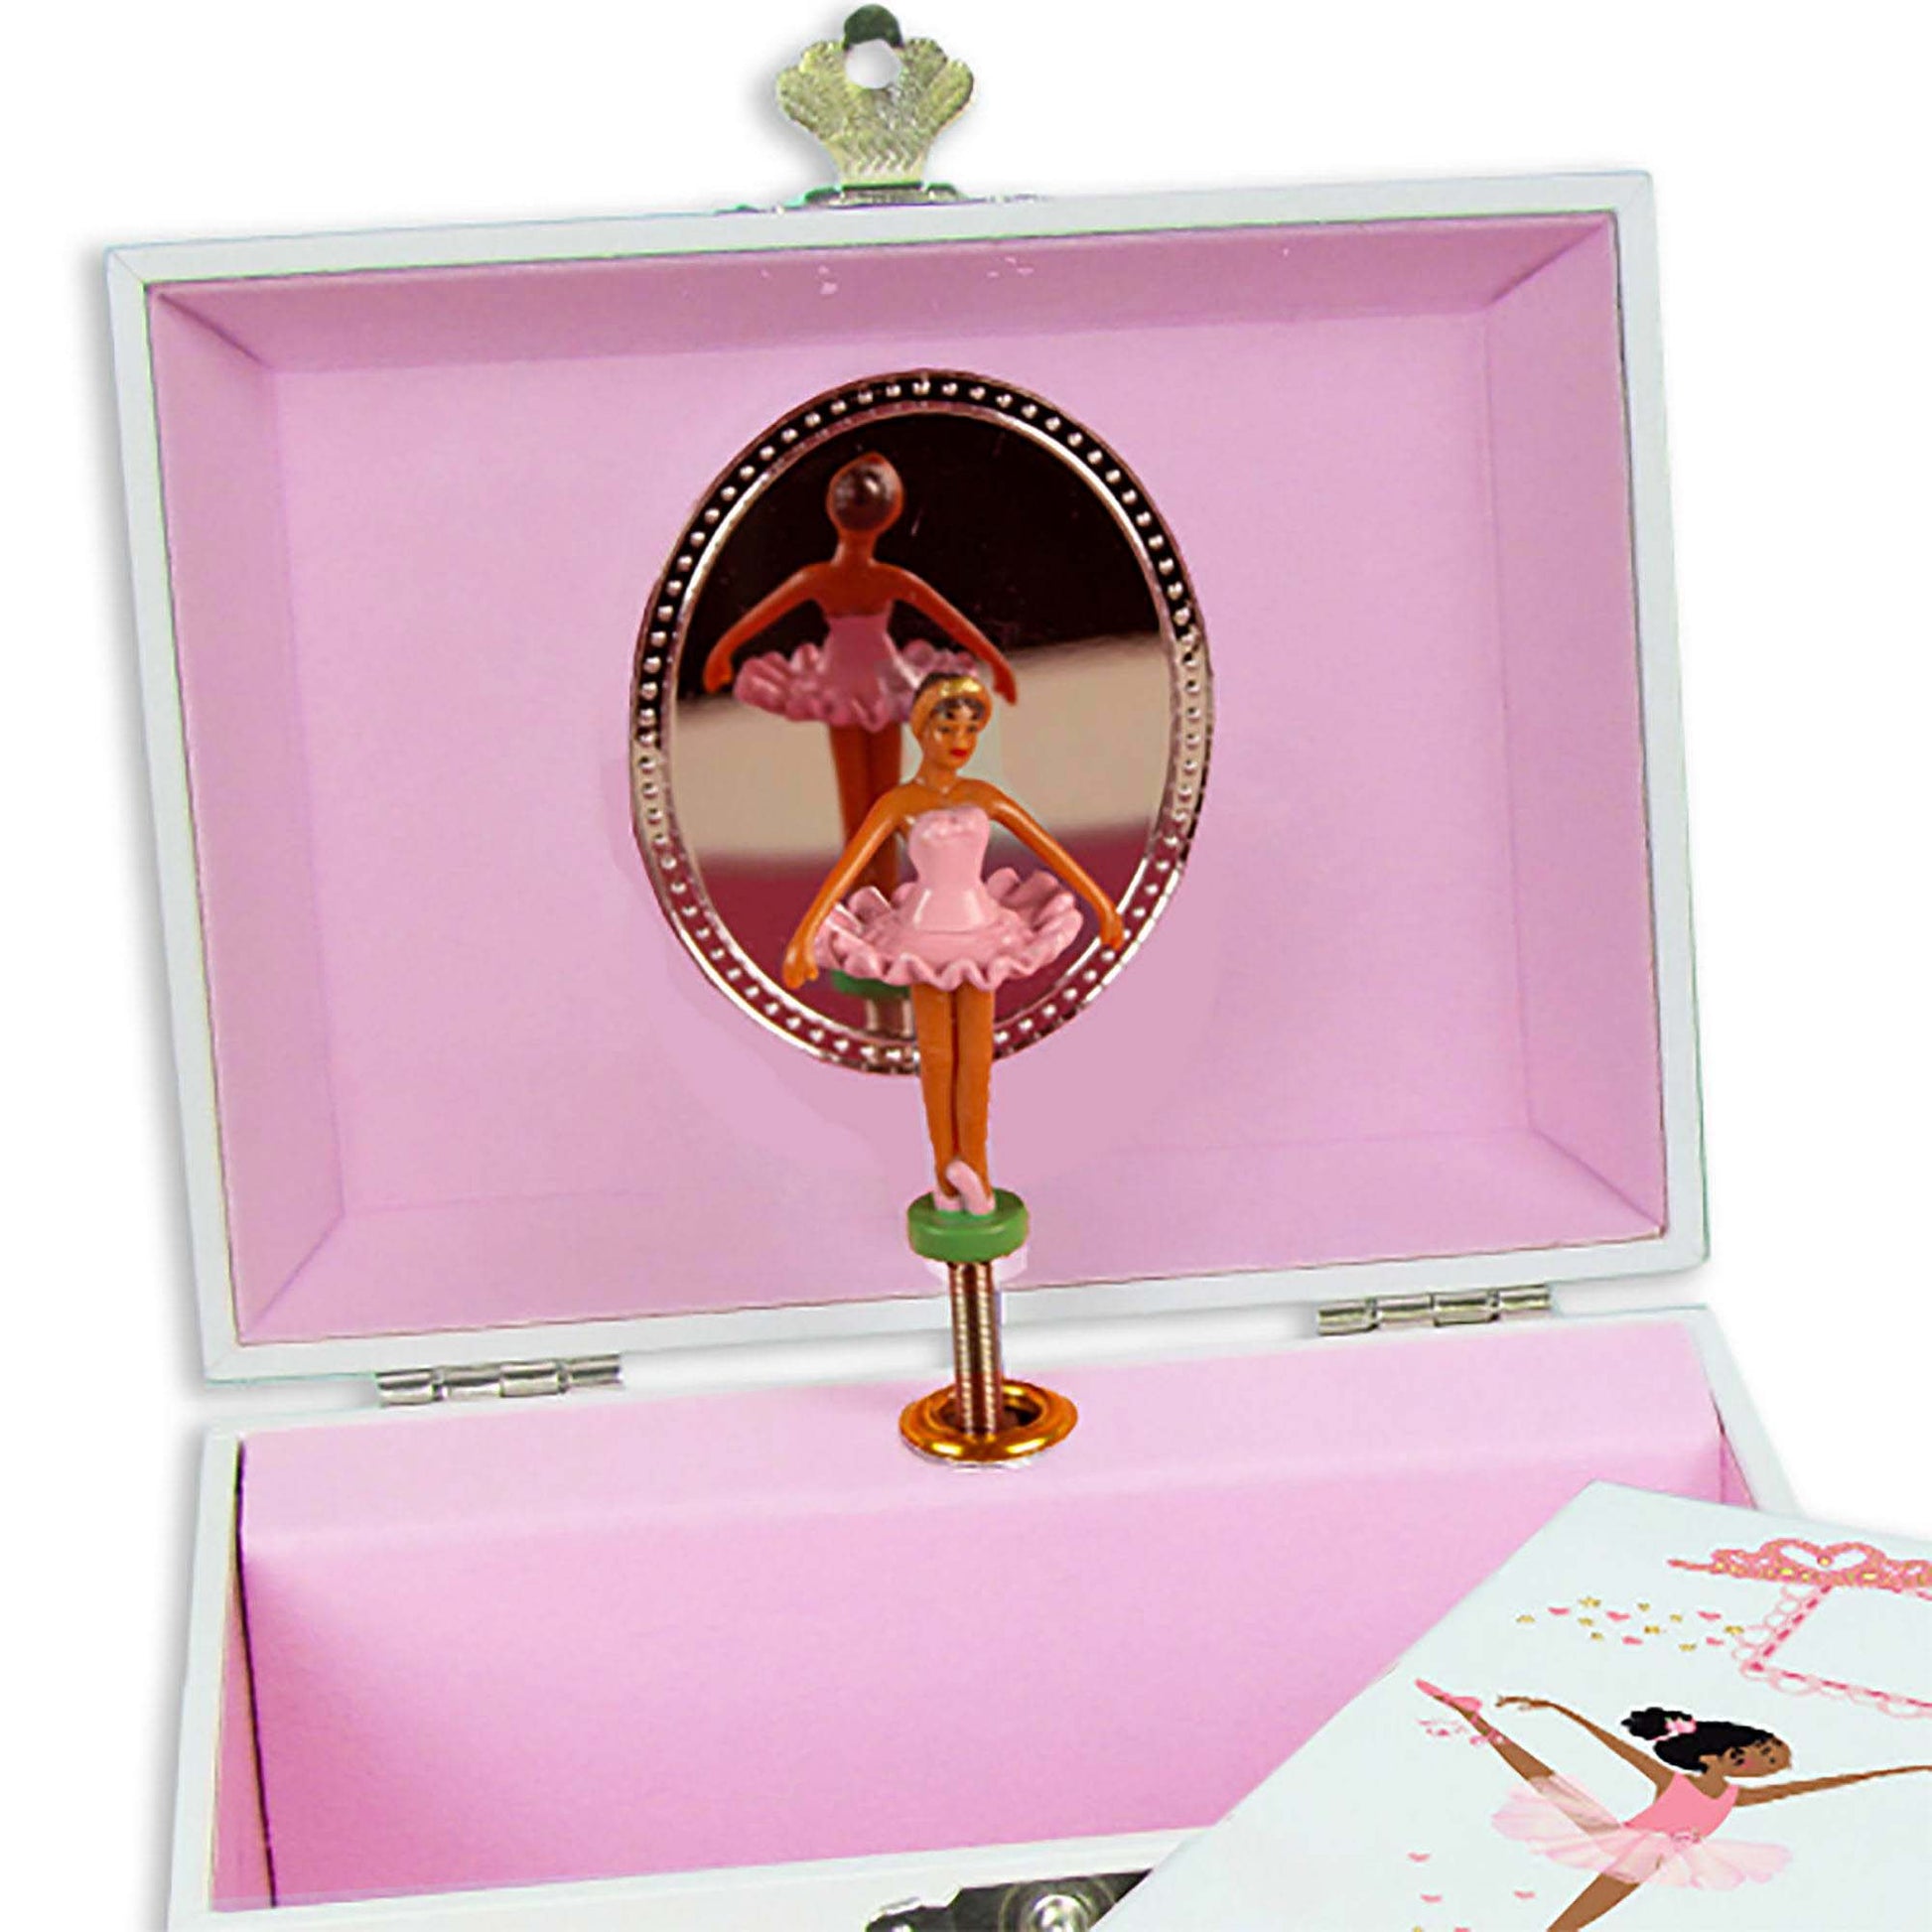 Personalized Ballerina Jewelry Box with Panda Bear design